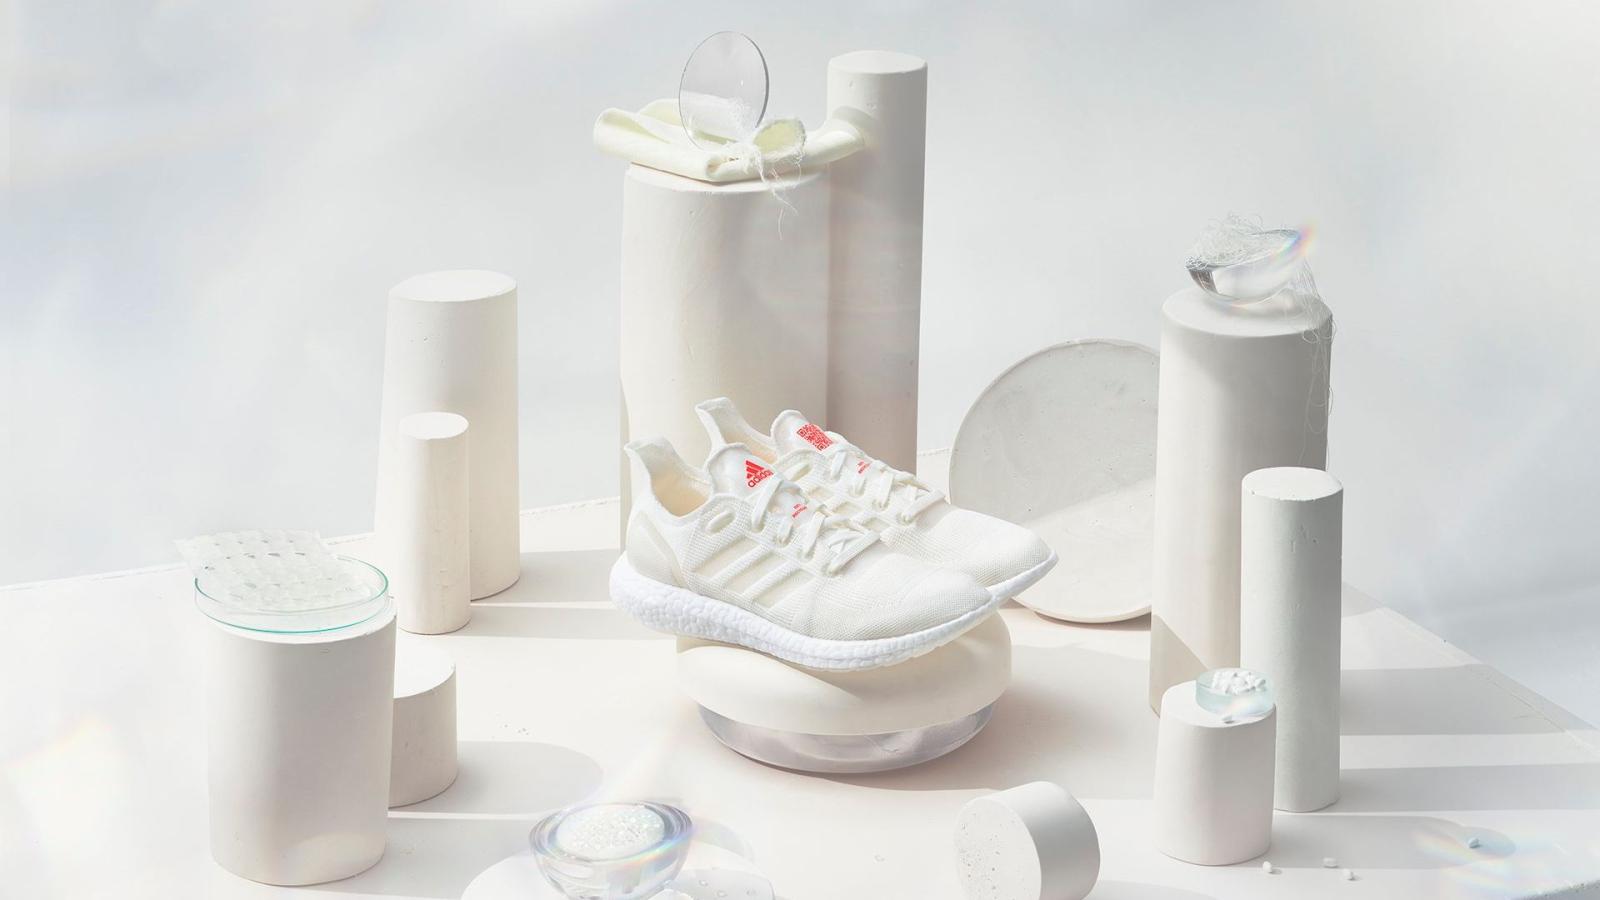 Adidas’ New Shoes Are Zero-Waste and Pretty Darn Chic